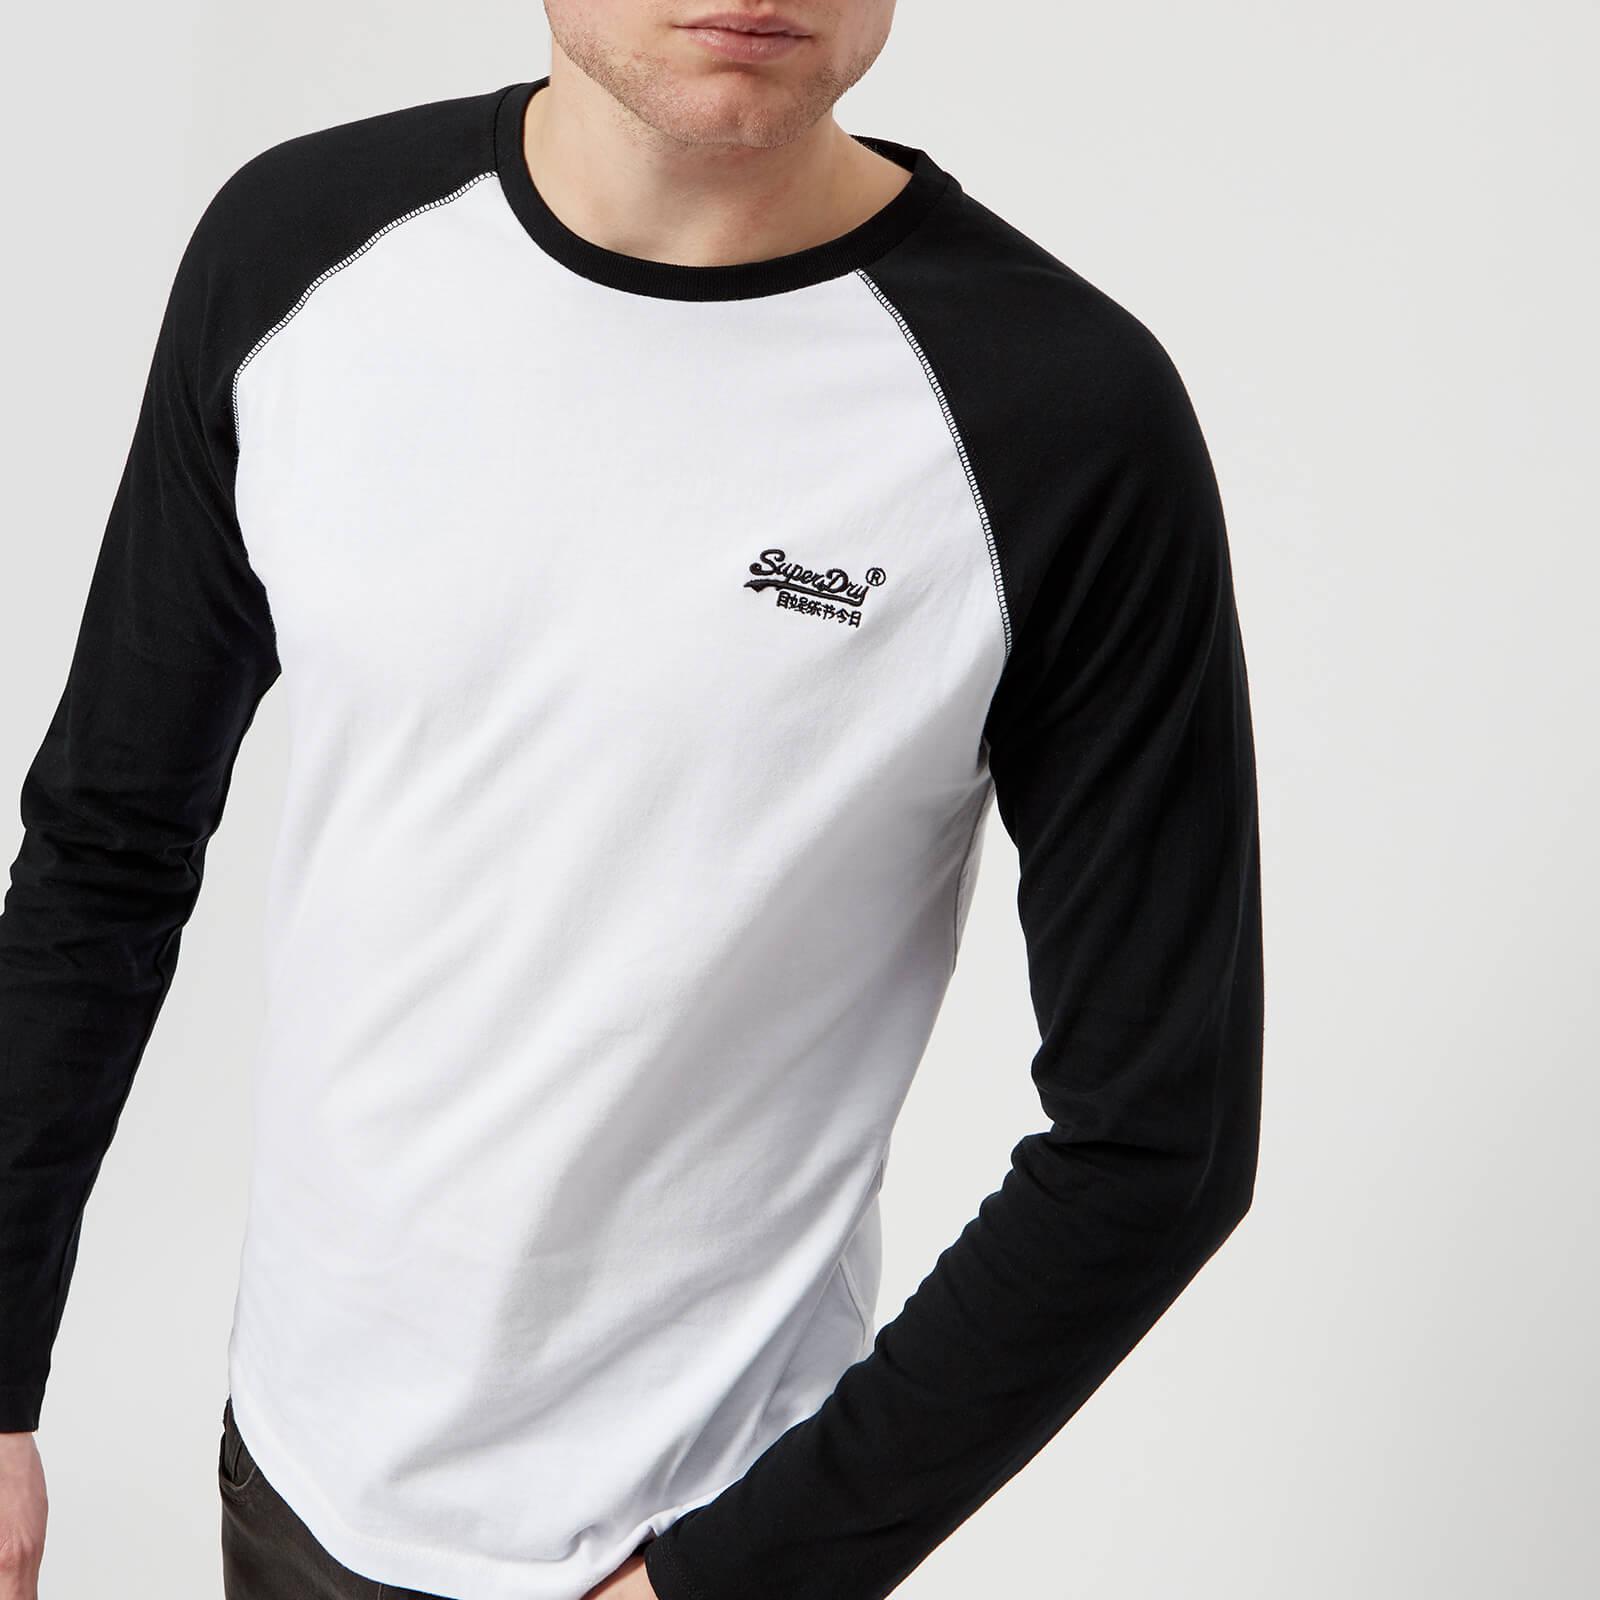 Superdry Orange Label Baseball Long Sleeve T-shirt in Black for Men - Lyst